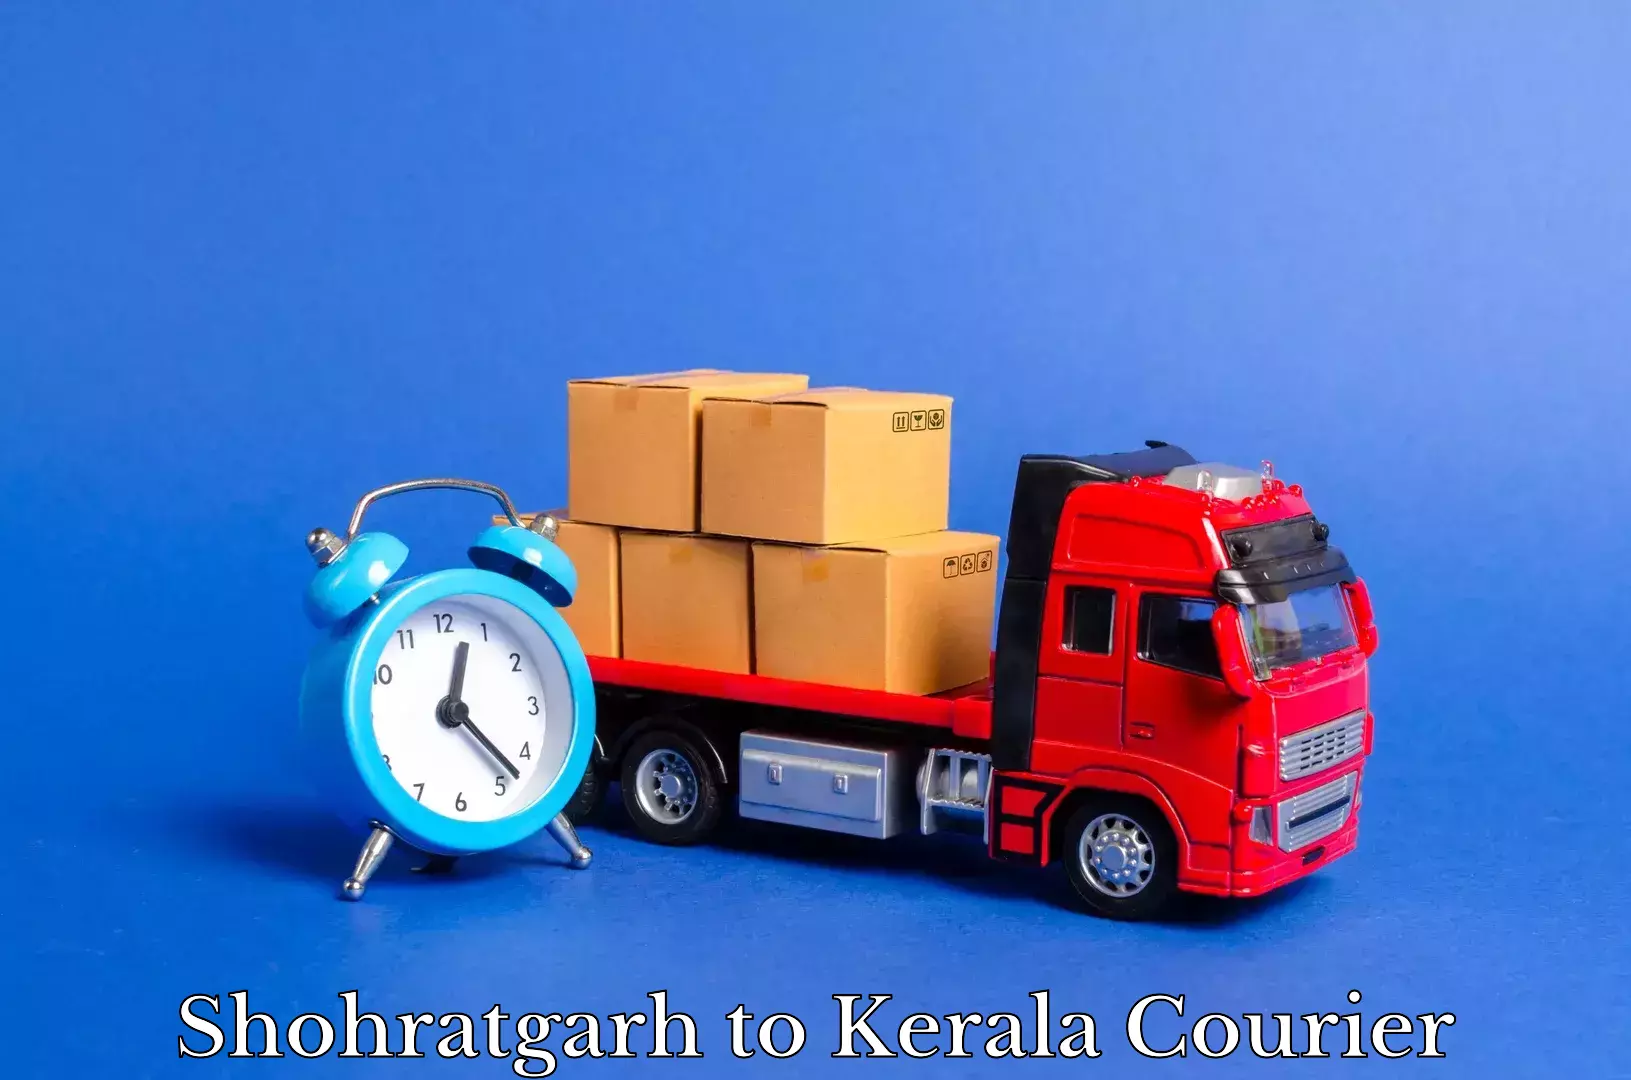 Budget-friendly movers Shohratgarh to Kozhikode